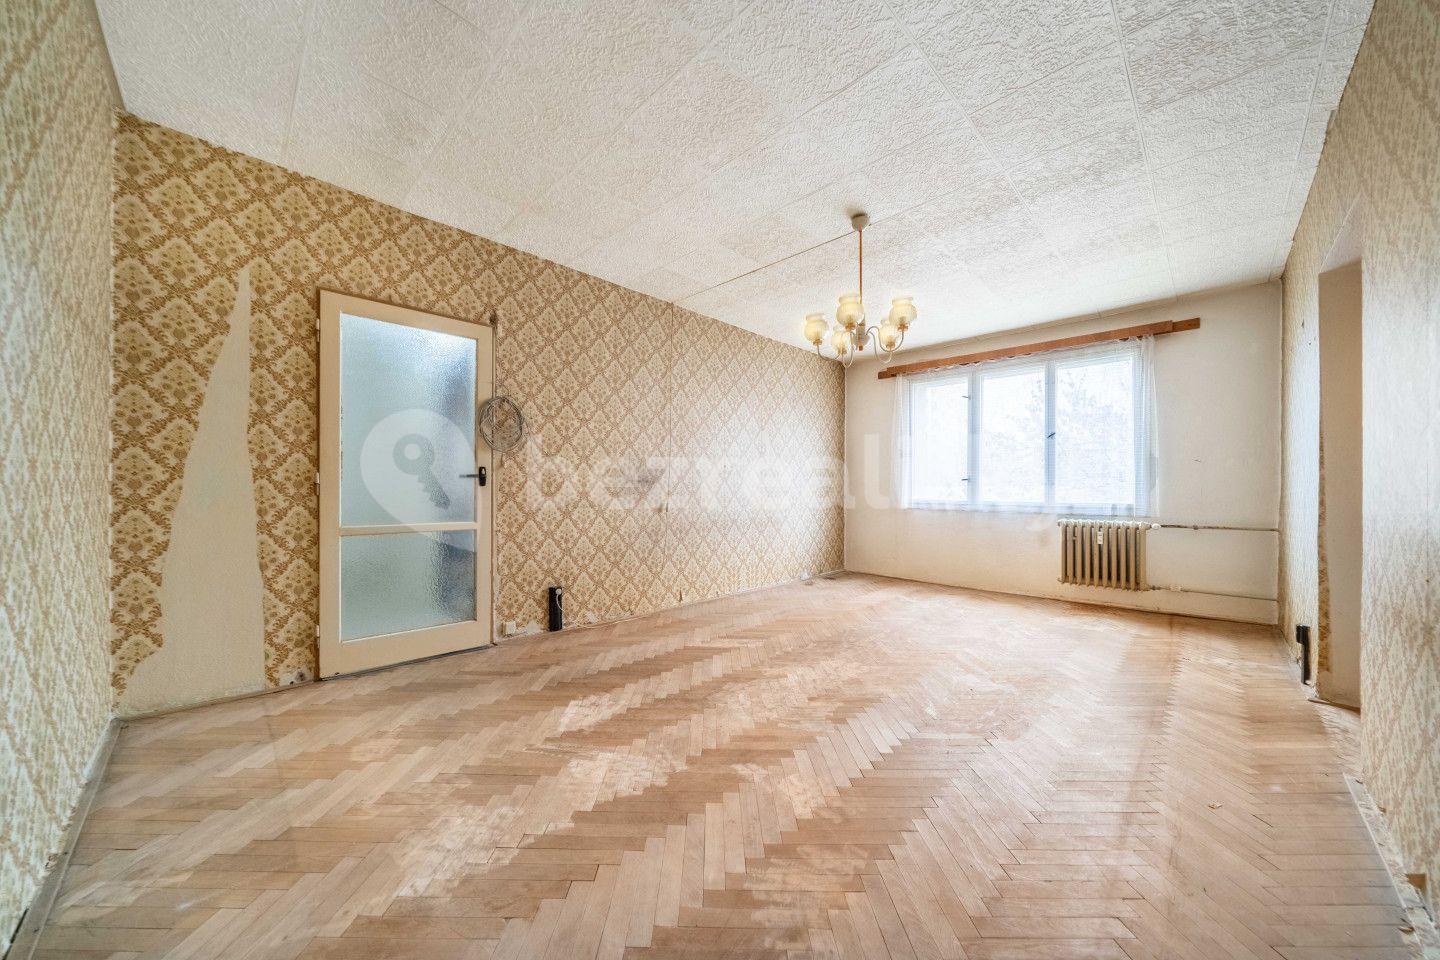 2 bedroom flat for sale, 54 m², Družby, Plzeň, Plzeňský Region